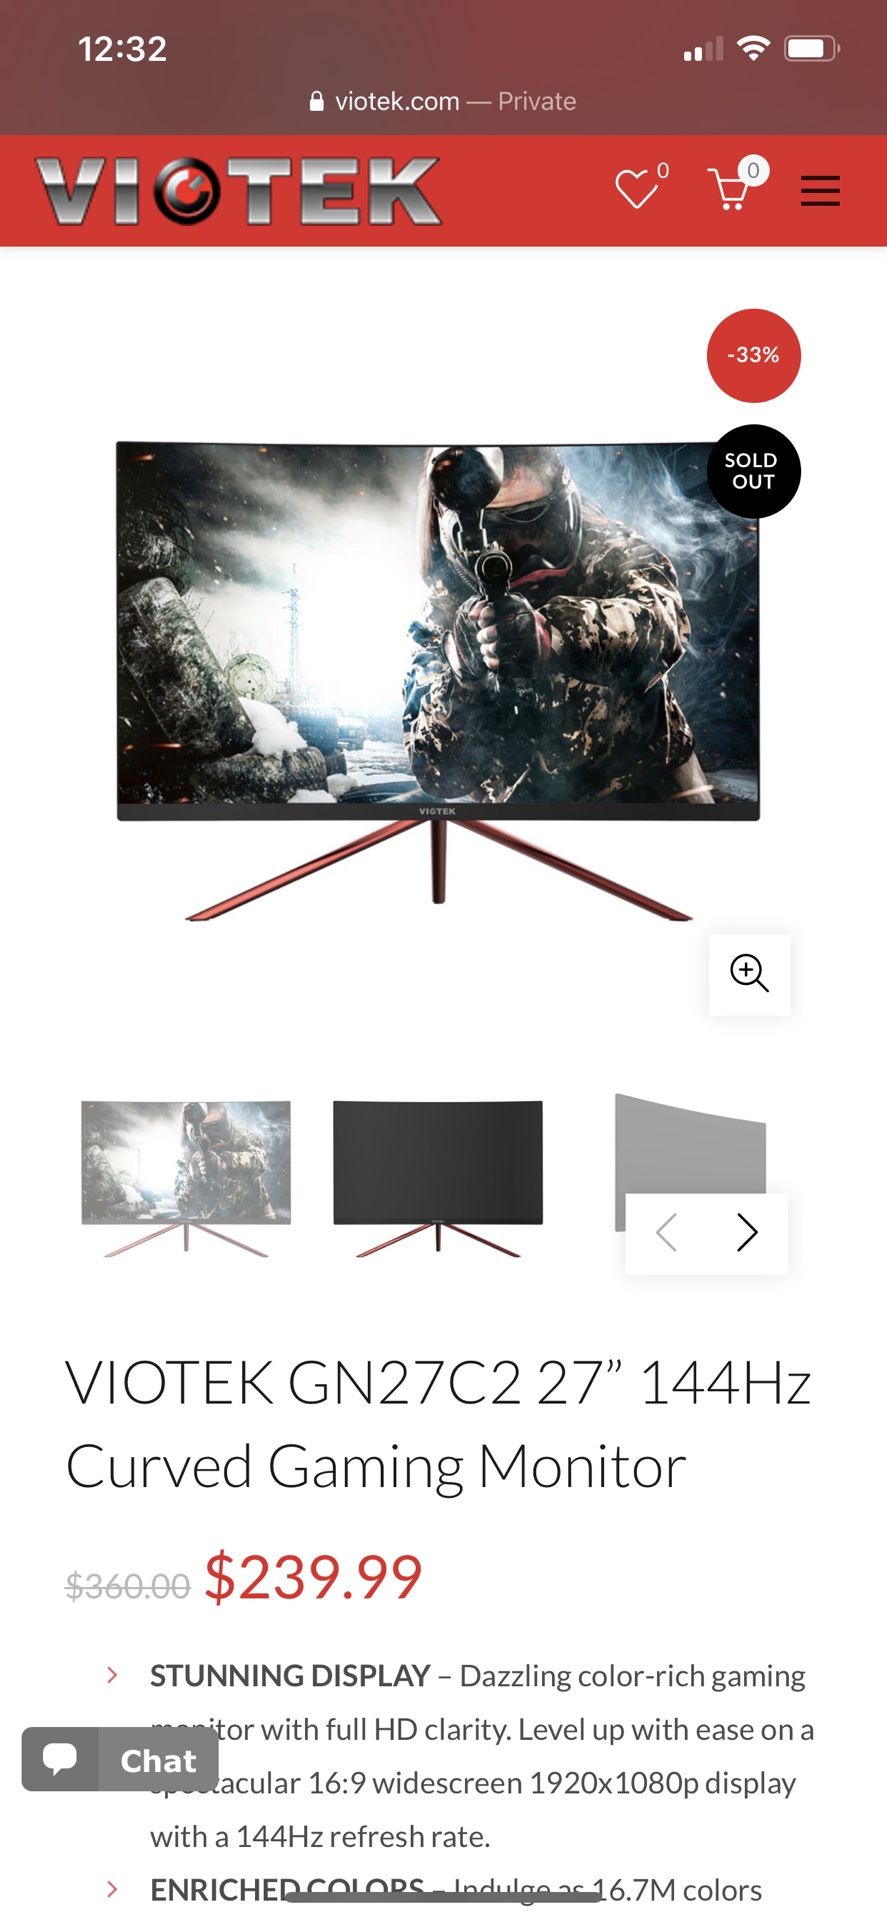 VIOTEK GN27C2 27” 144Hz Curved Gaming Monitor